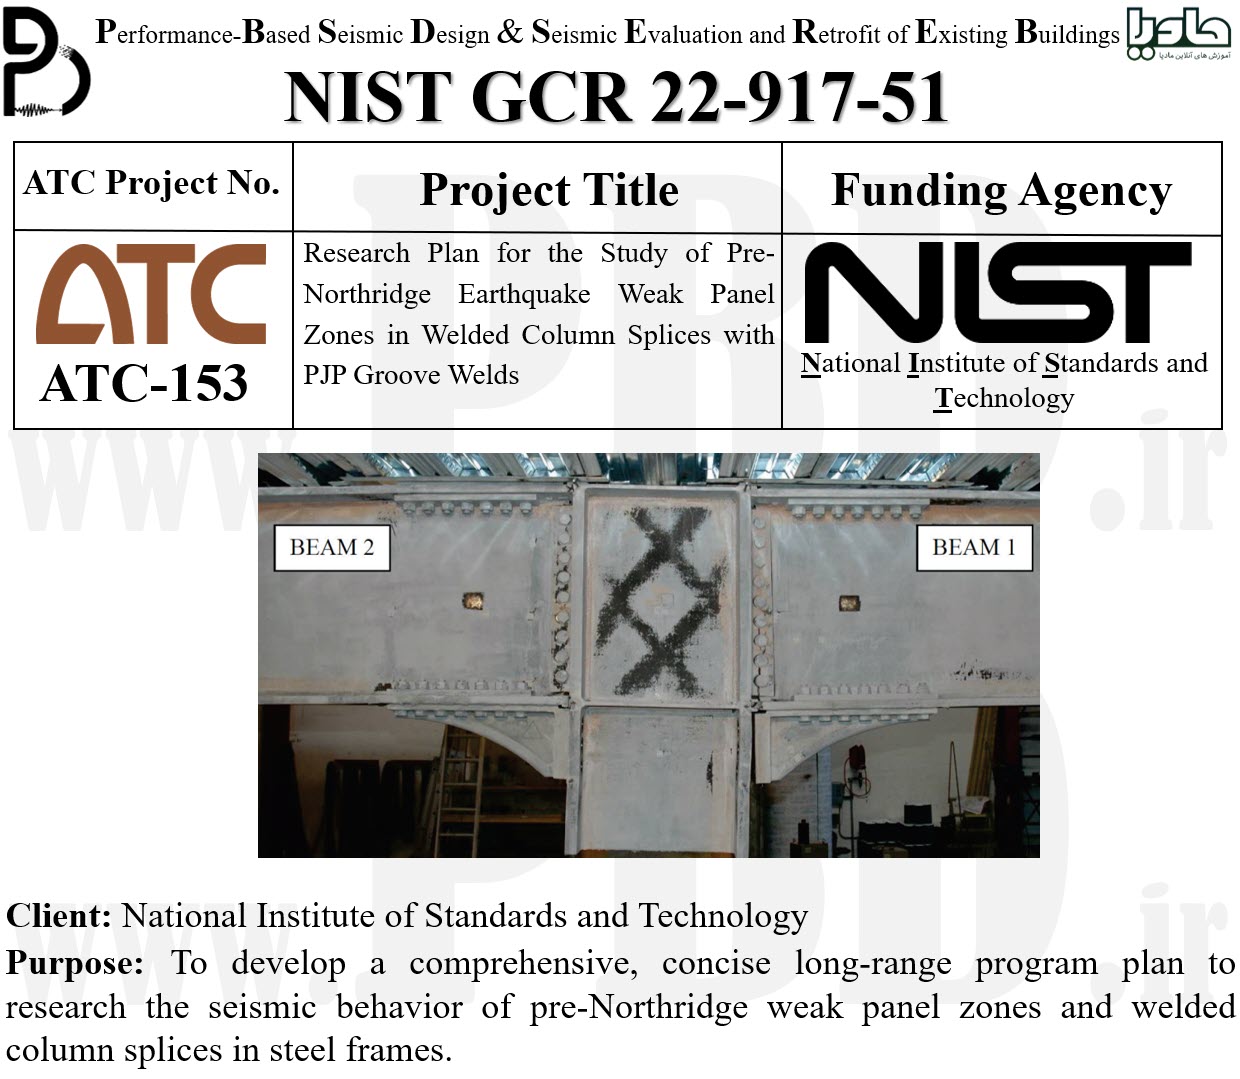 NIST GCR 22-917-51